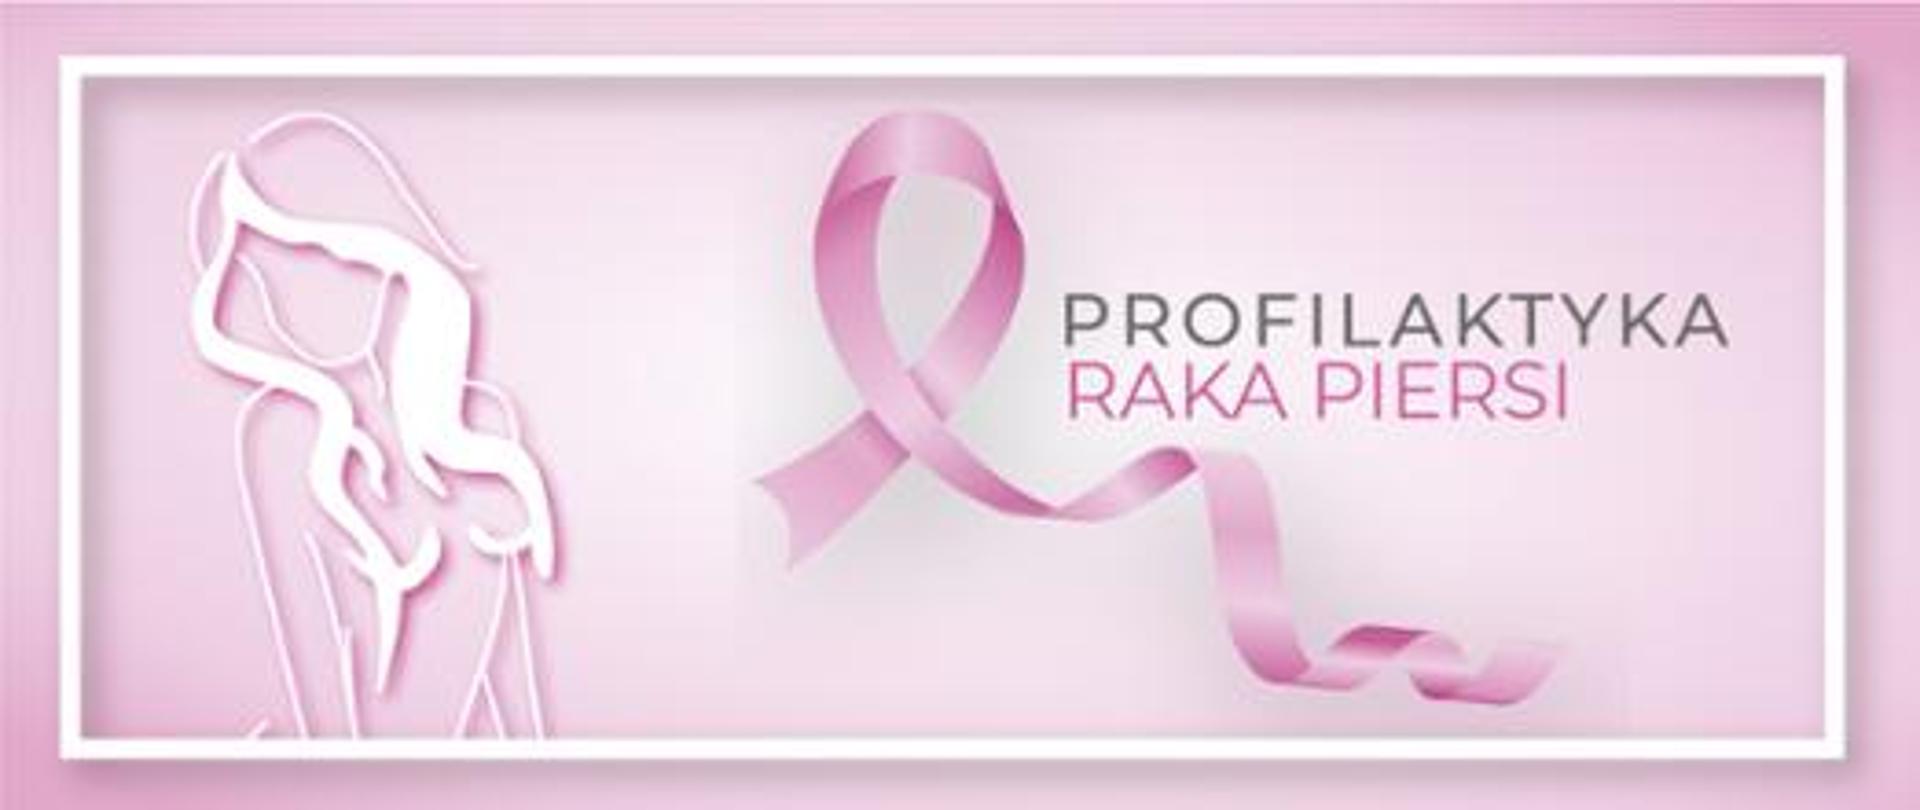 Październik miesiącem profilaktyki raka piersi